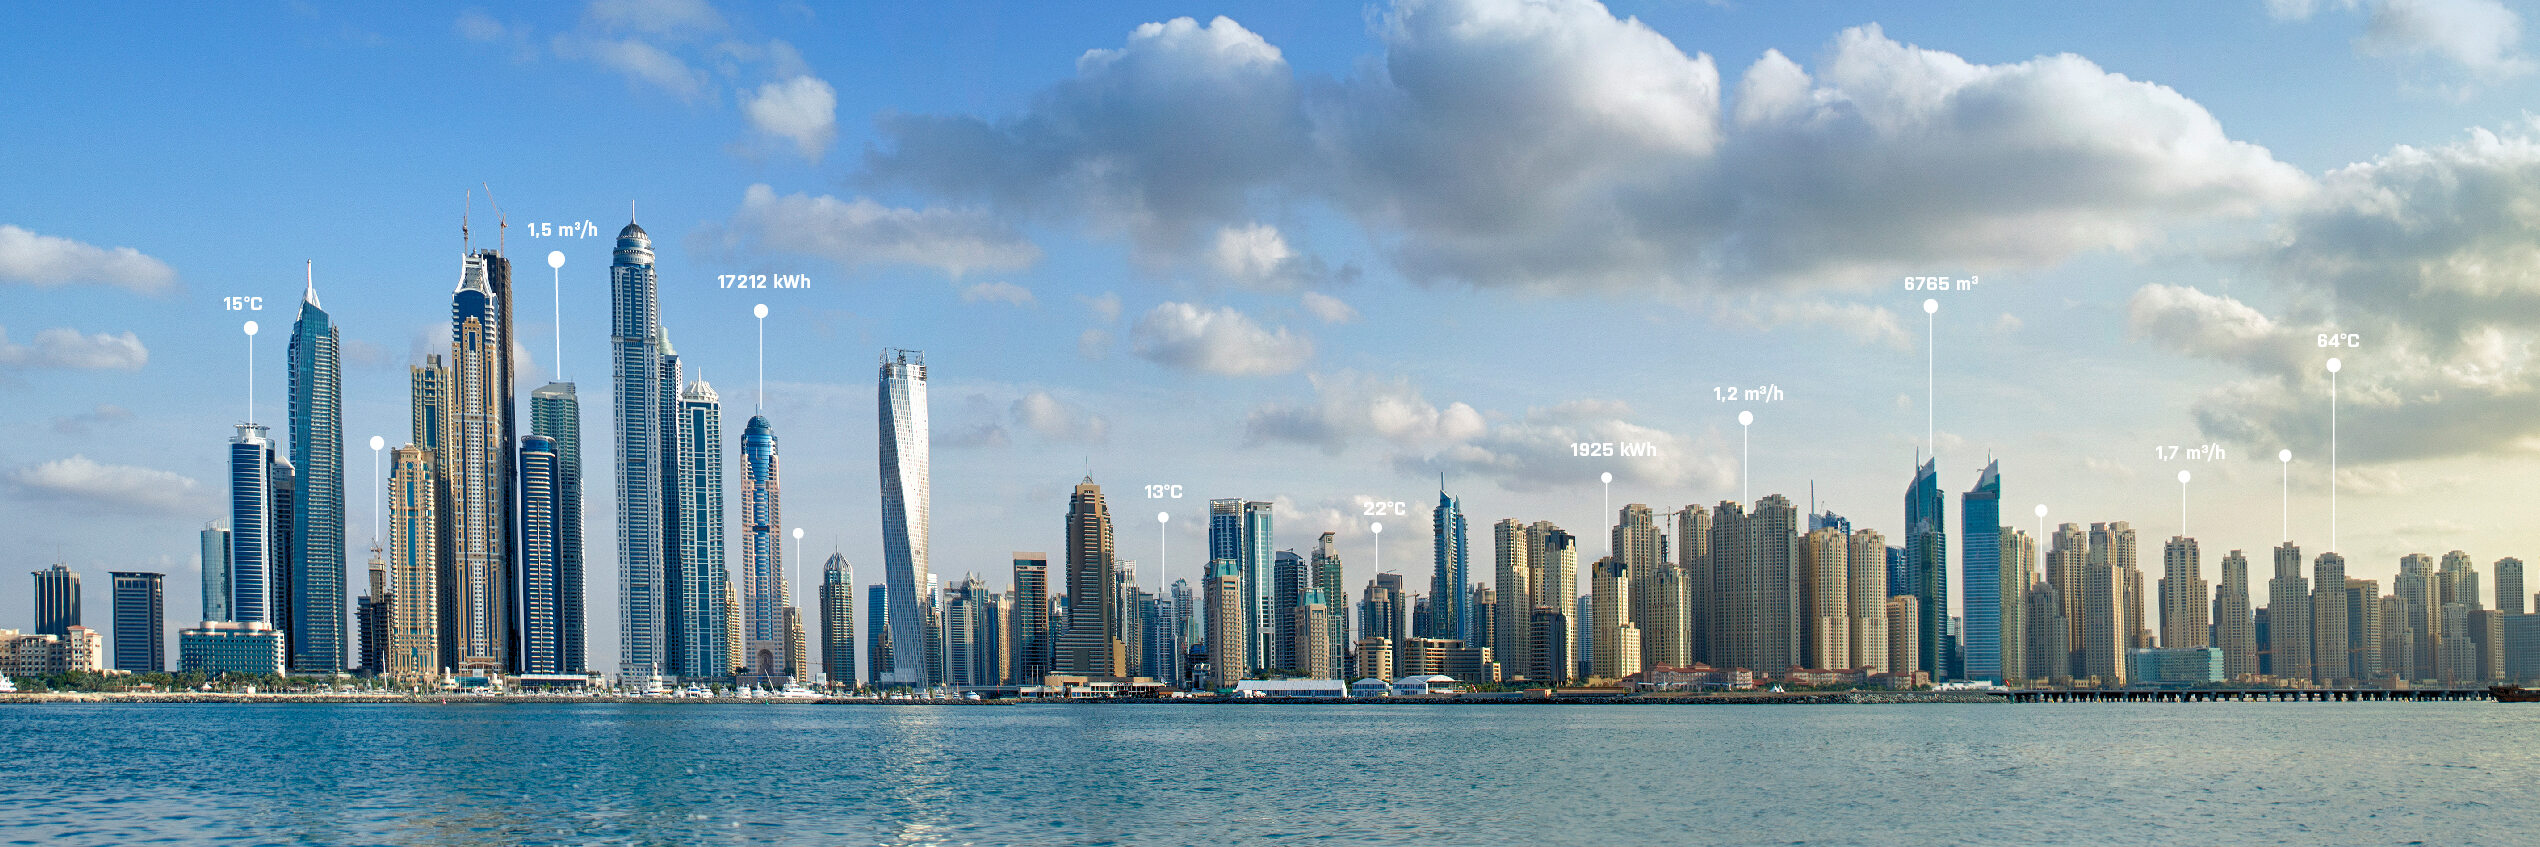 Dubai: onze groeiende regionale hub